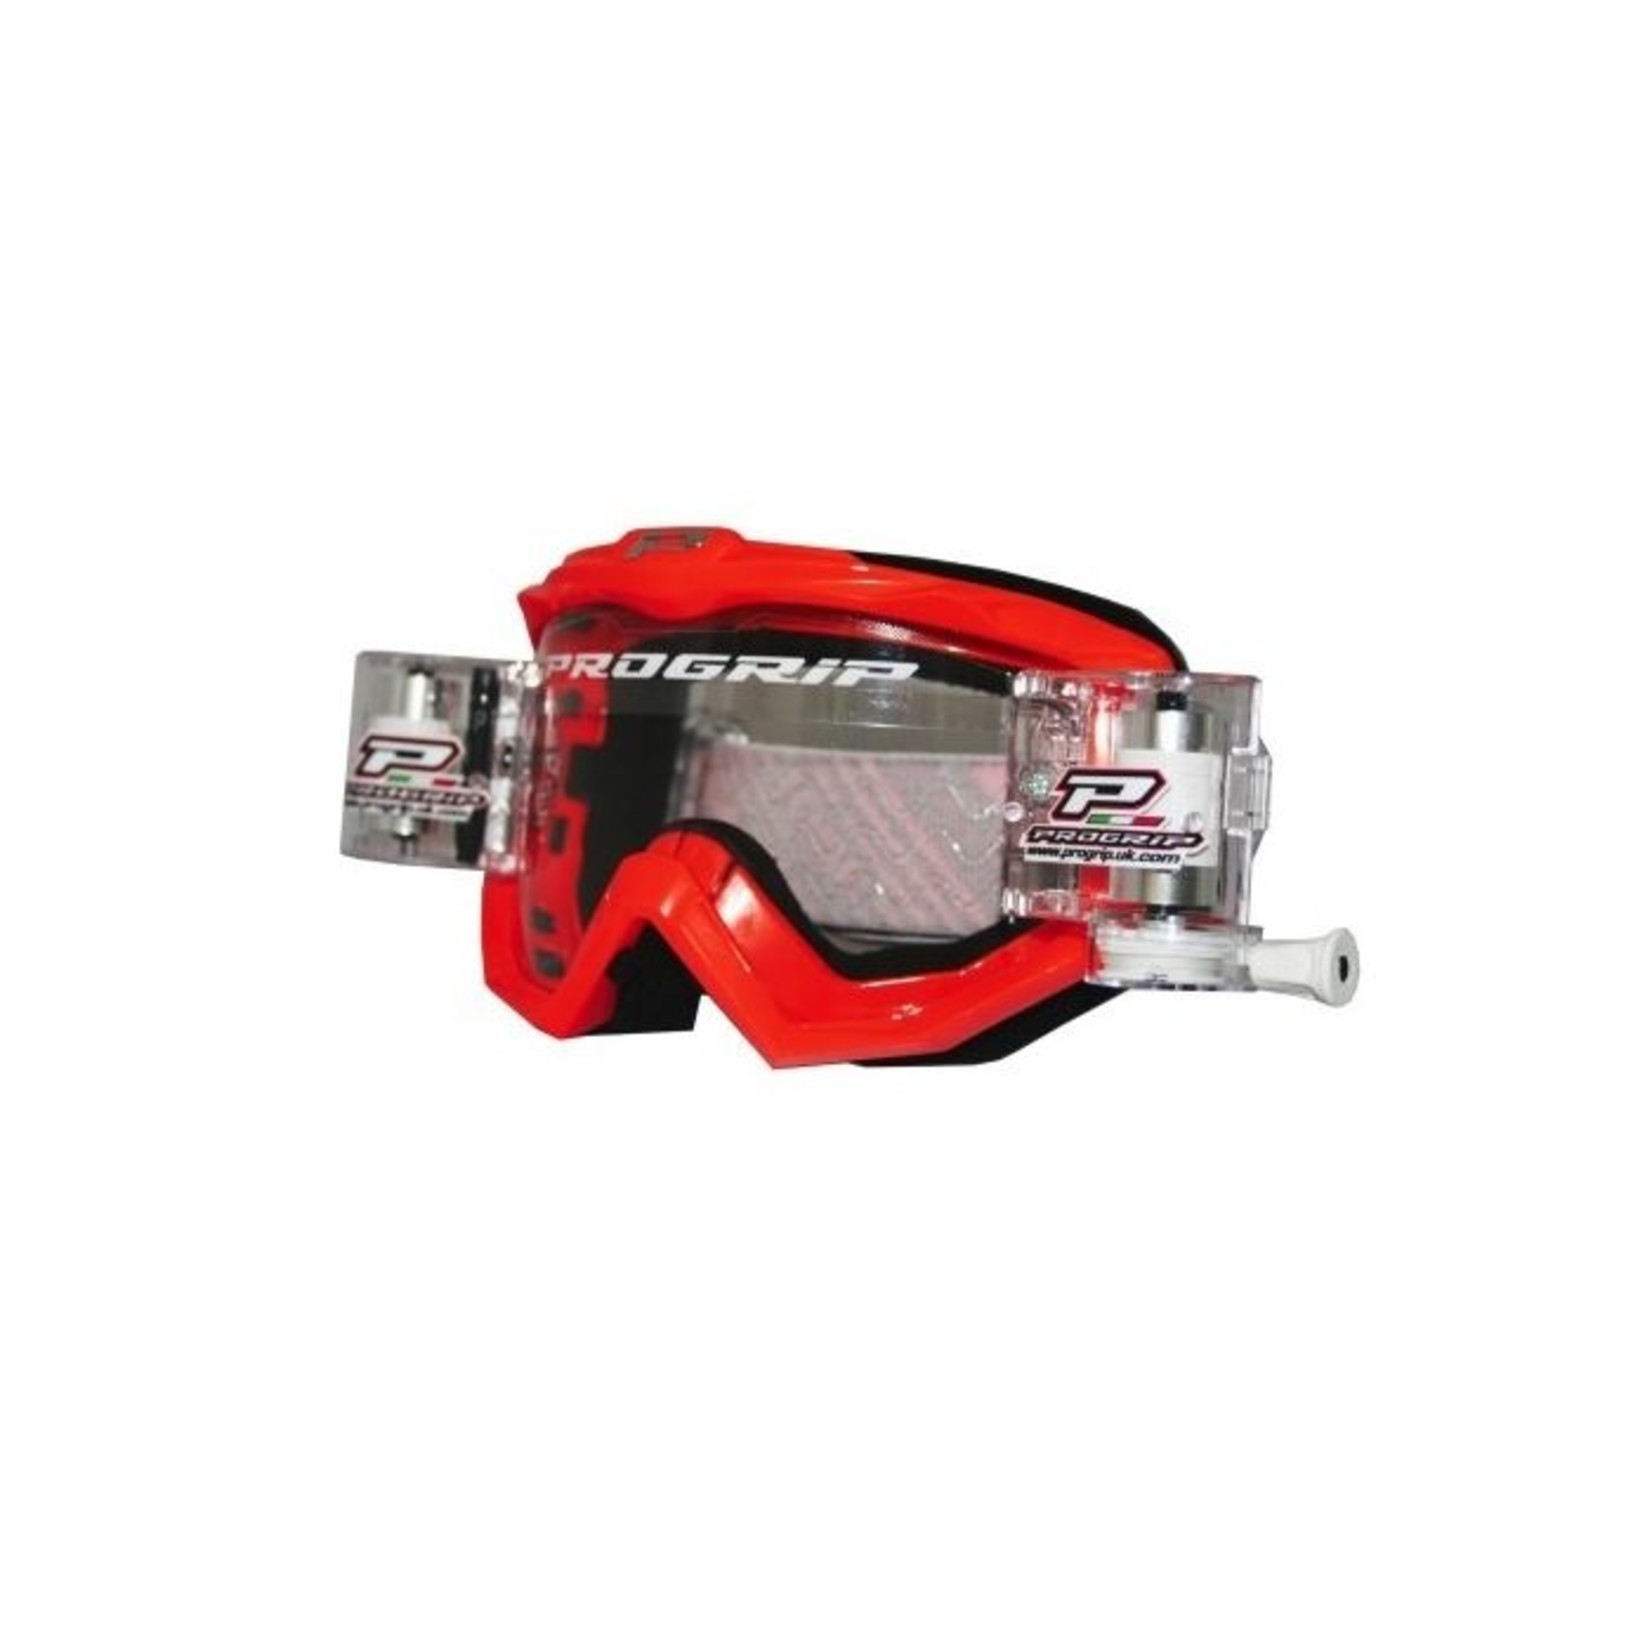 Progrip Progrip 3201 Atzaki Racerpack XL bril - rood